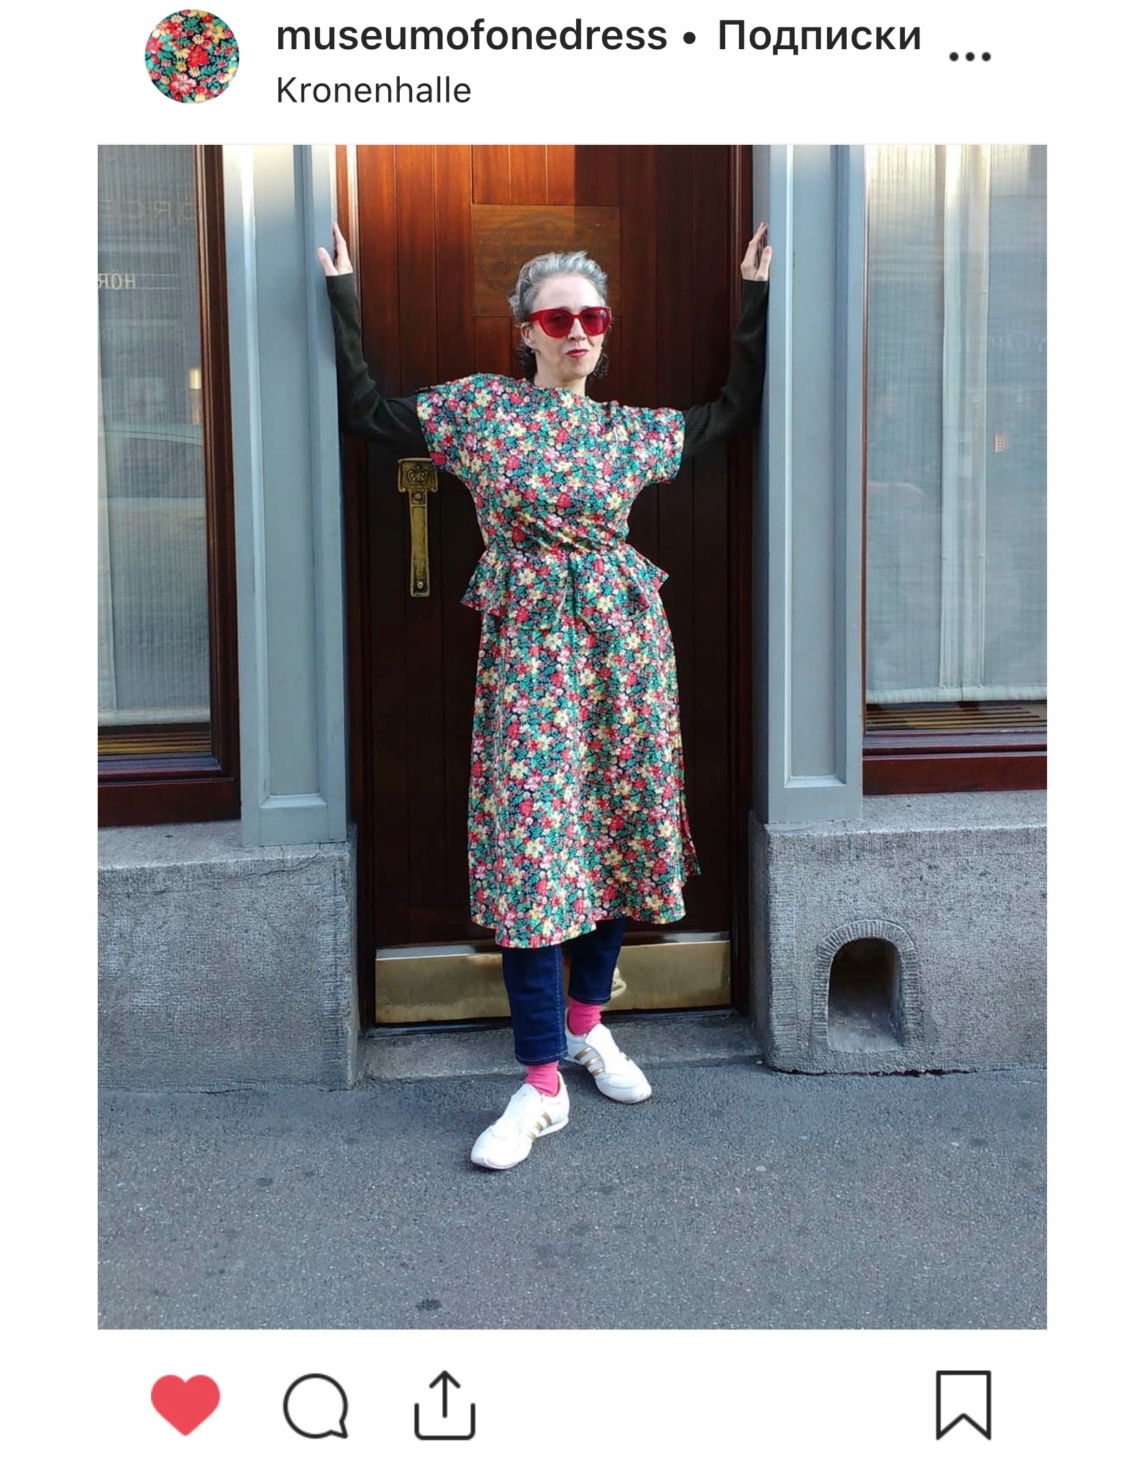 Gorod Ustinov
"Museum of one Dress" on Instagram, screenshot